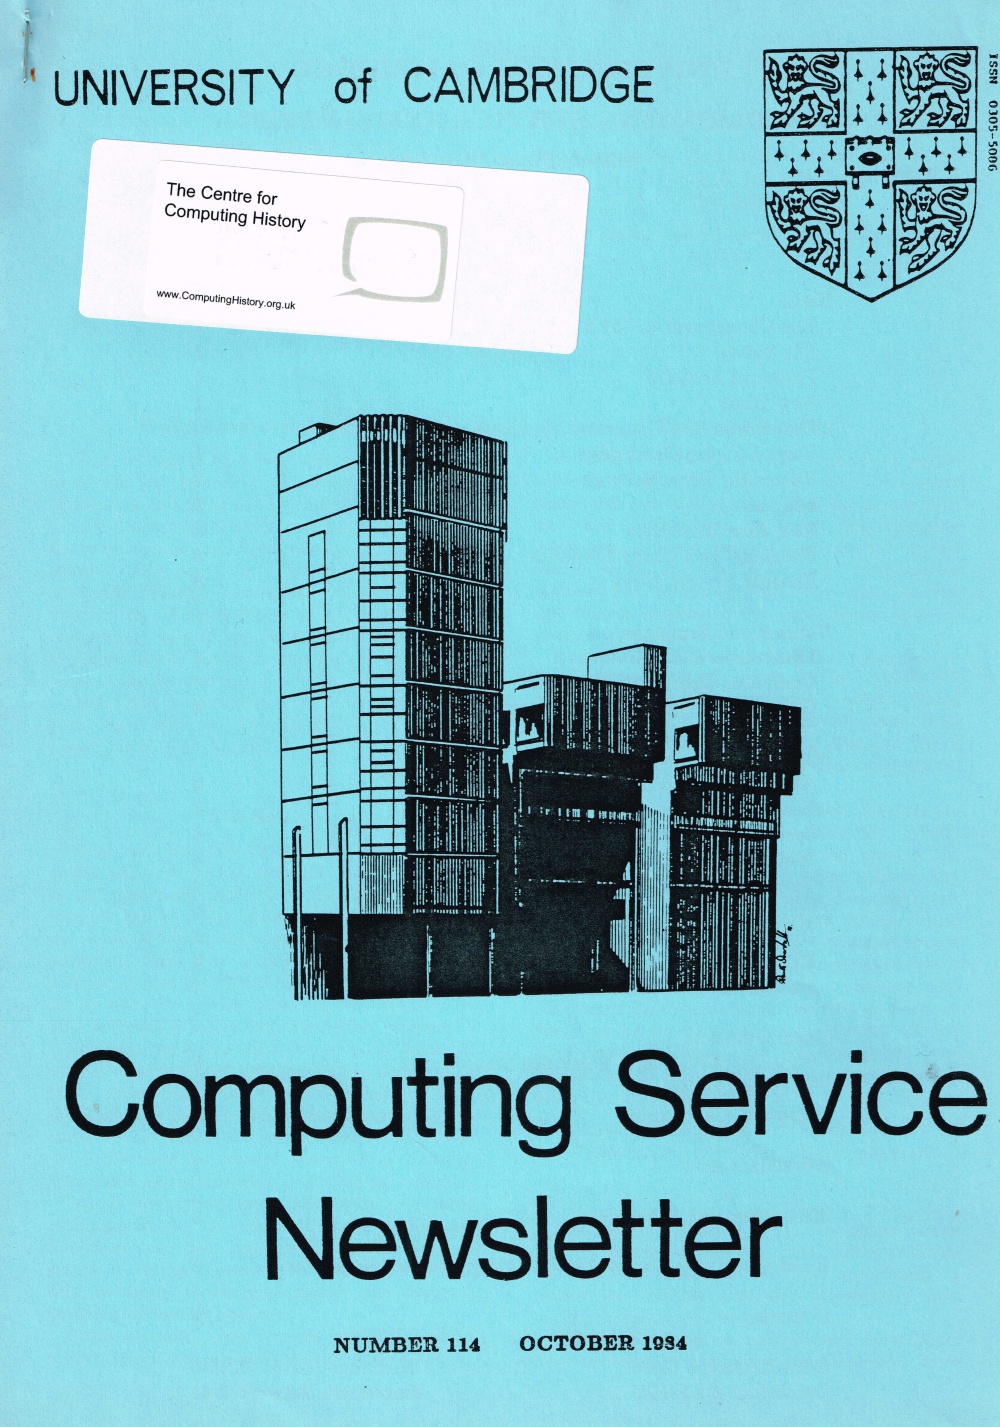 Article: University of Cambridge Computing Service October 1984 Newsletter 114